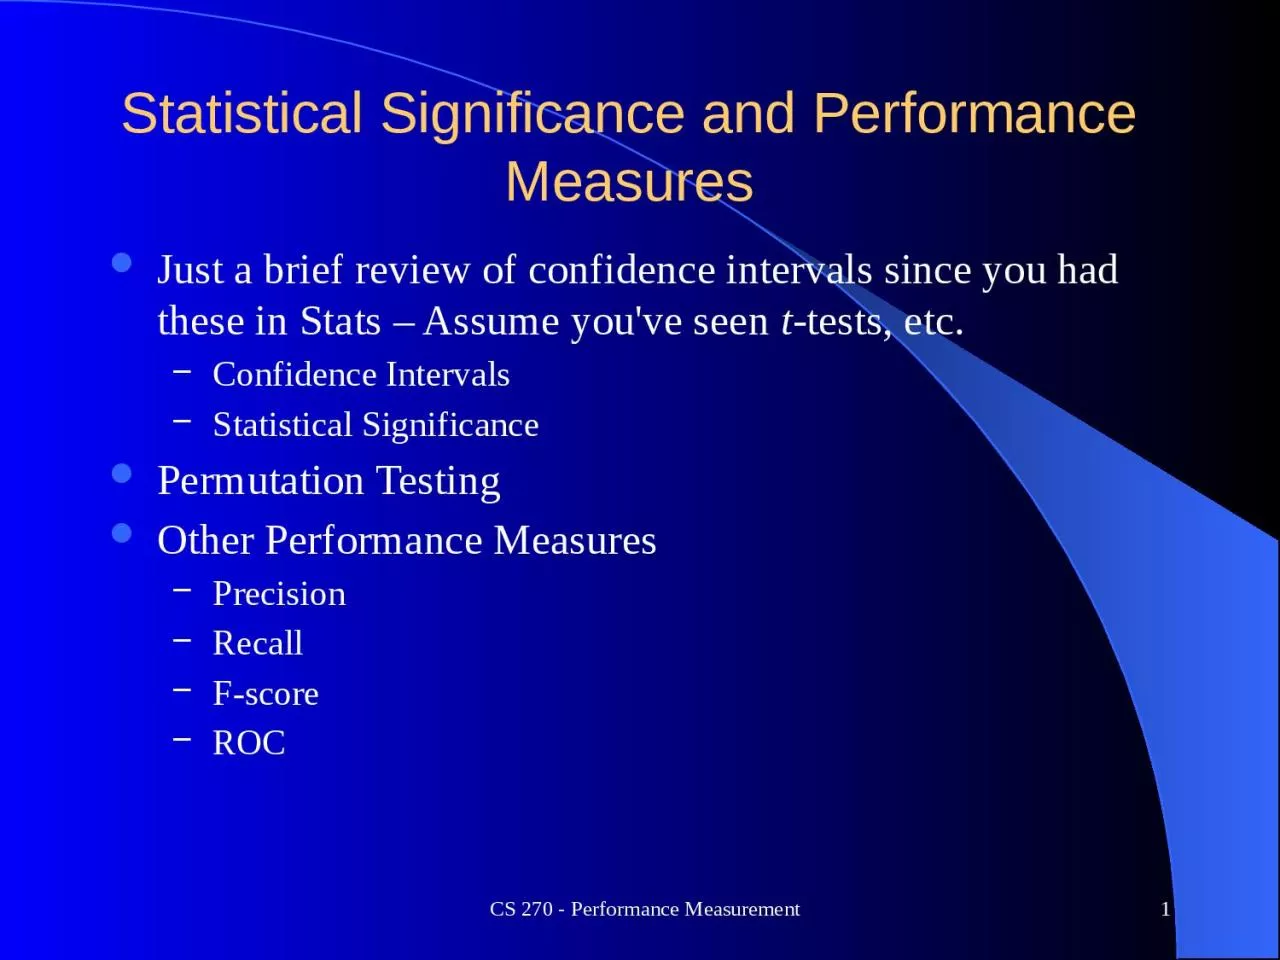 CS 472 - Performance Measurement